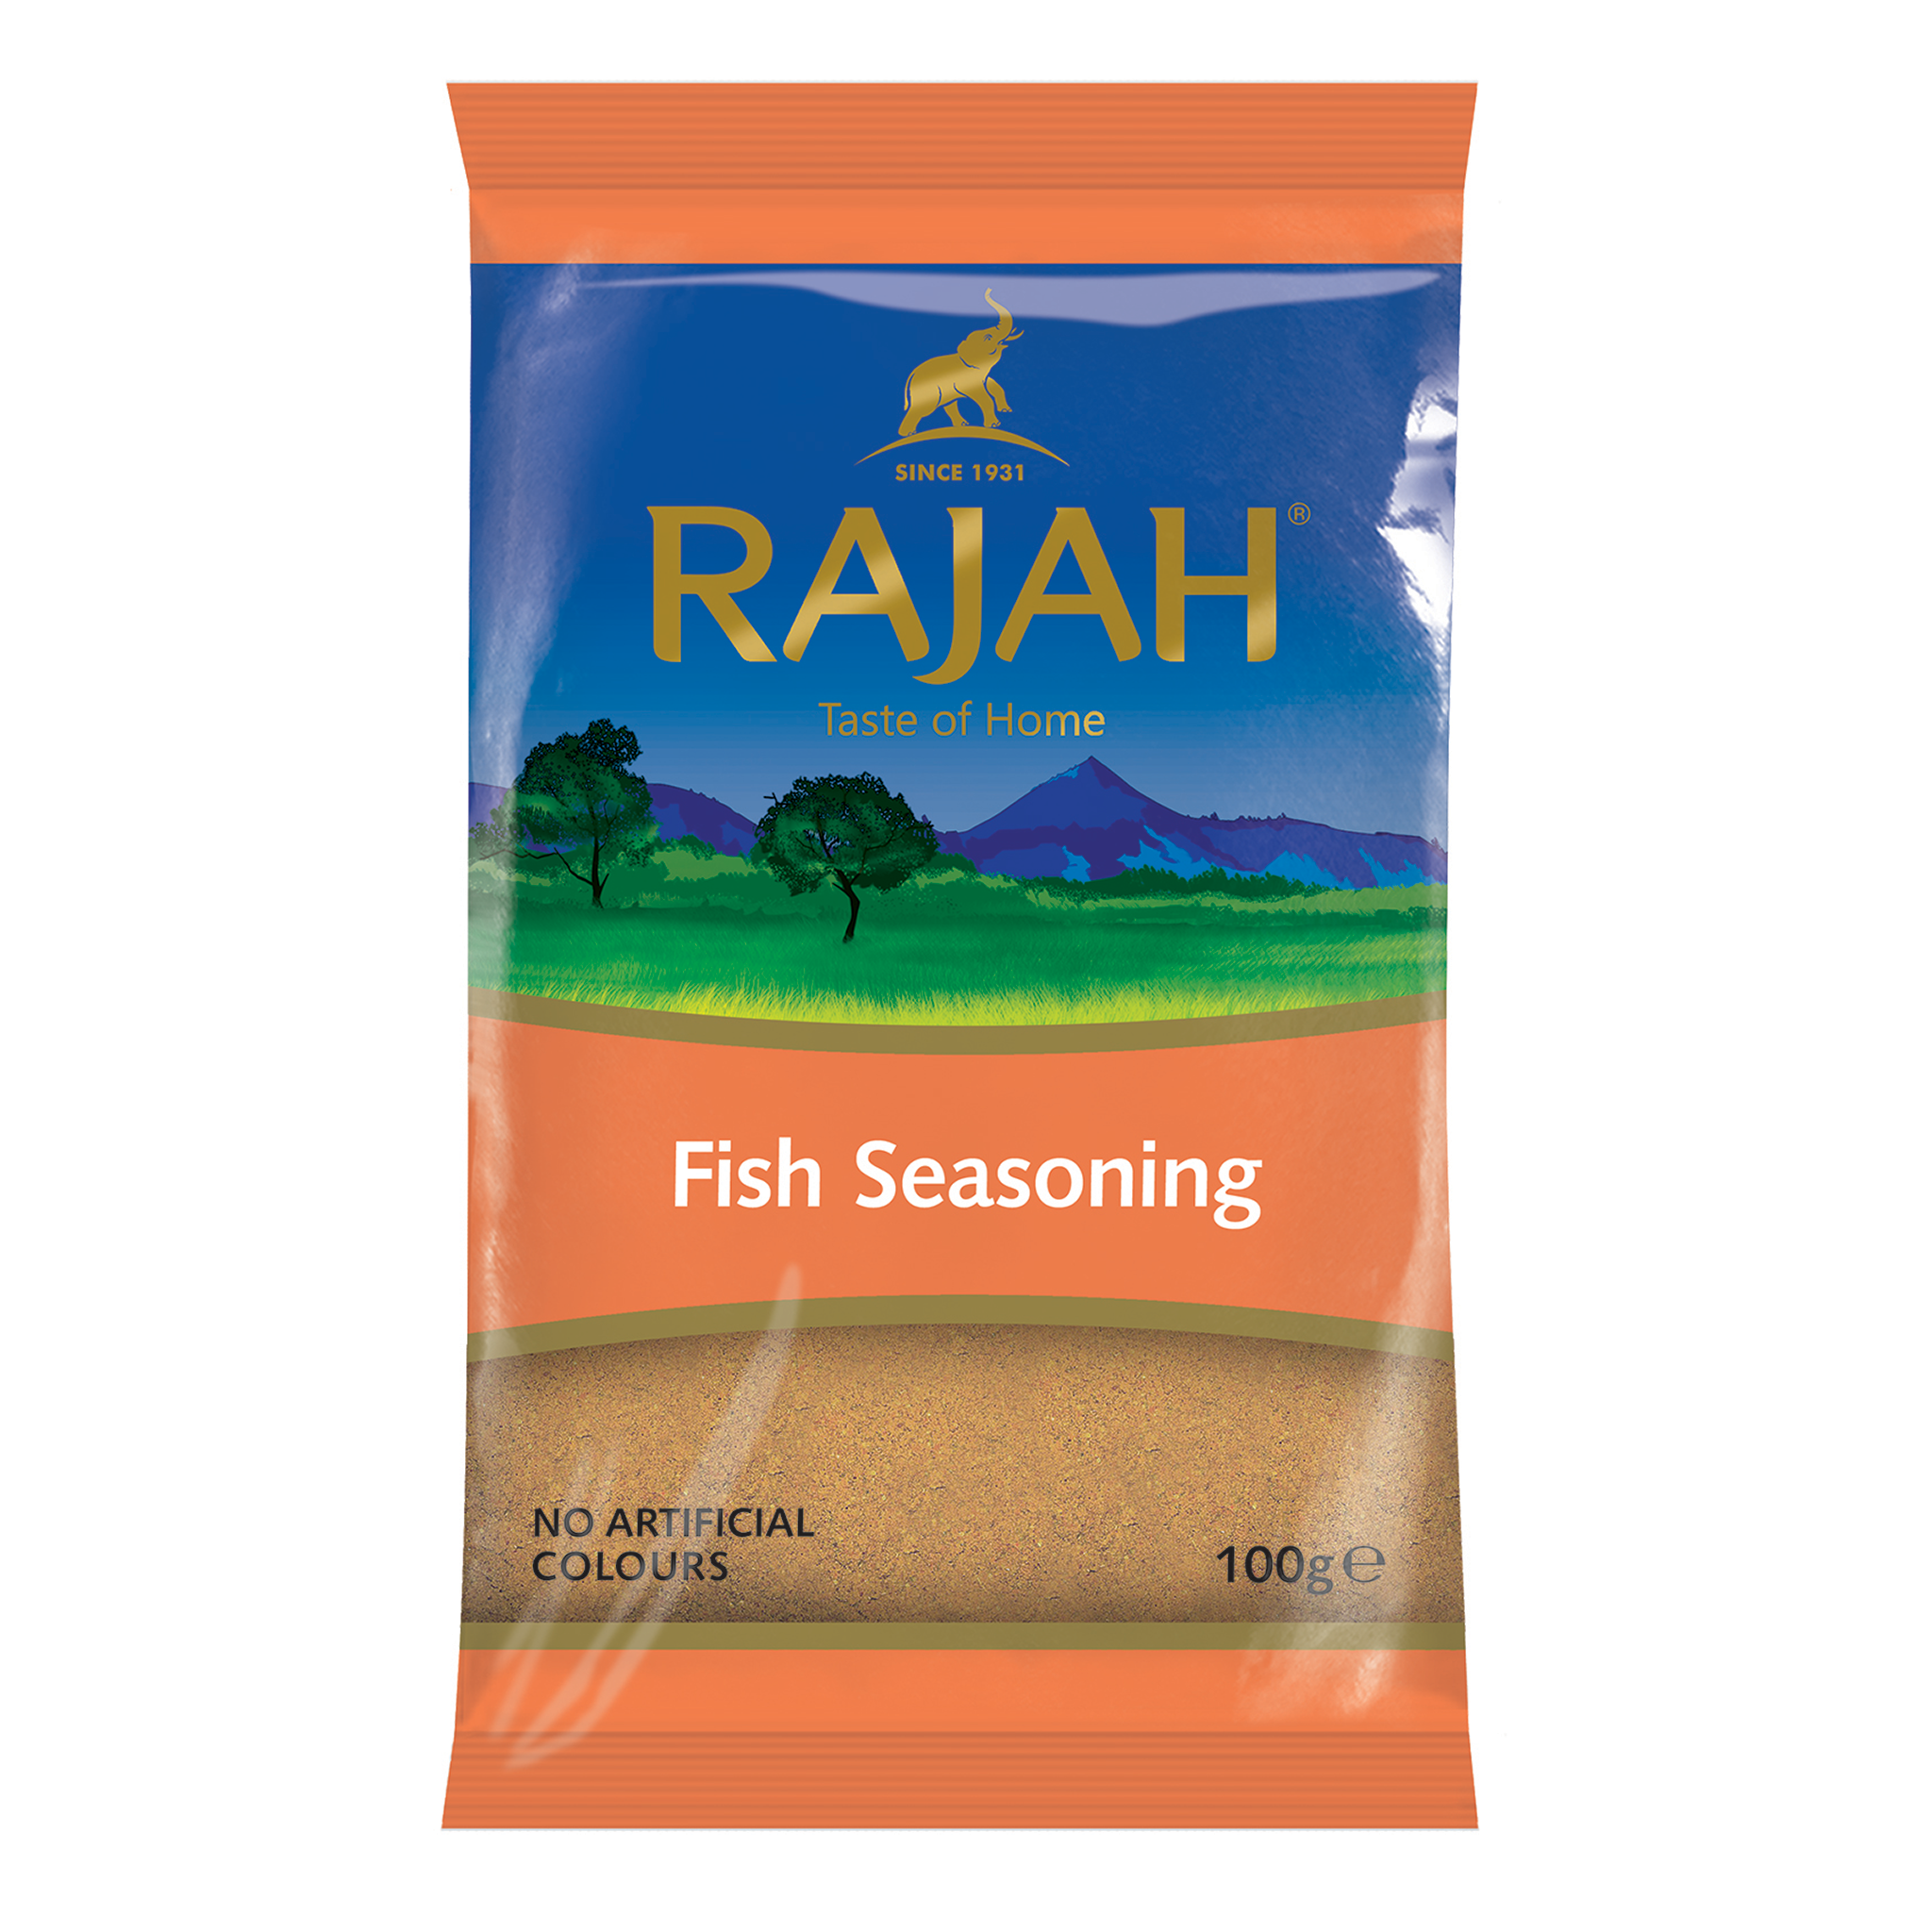 Fish Seasoning Spice Mix 100g by Rajah